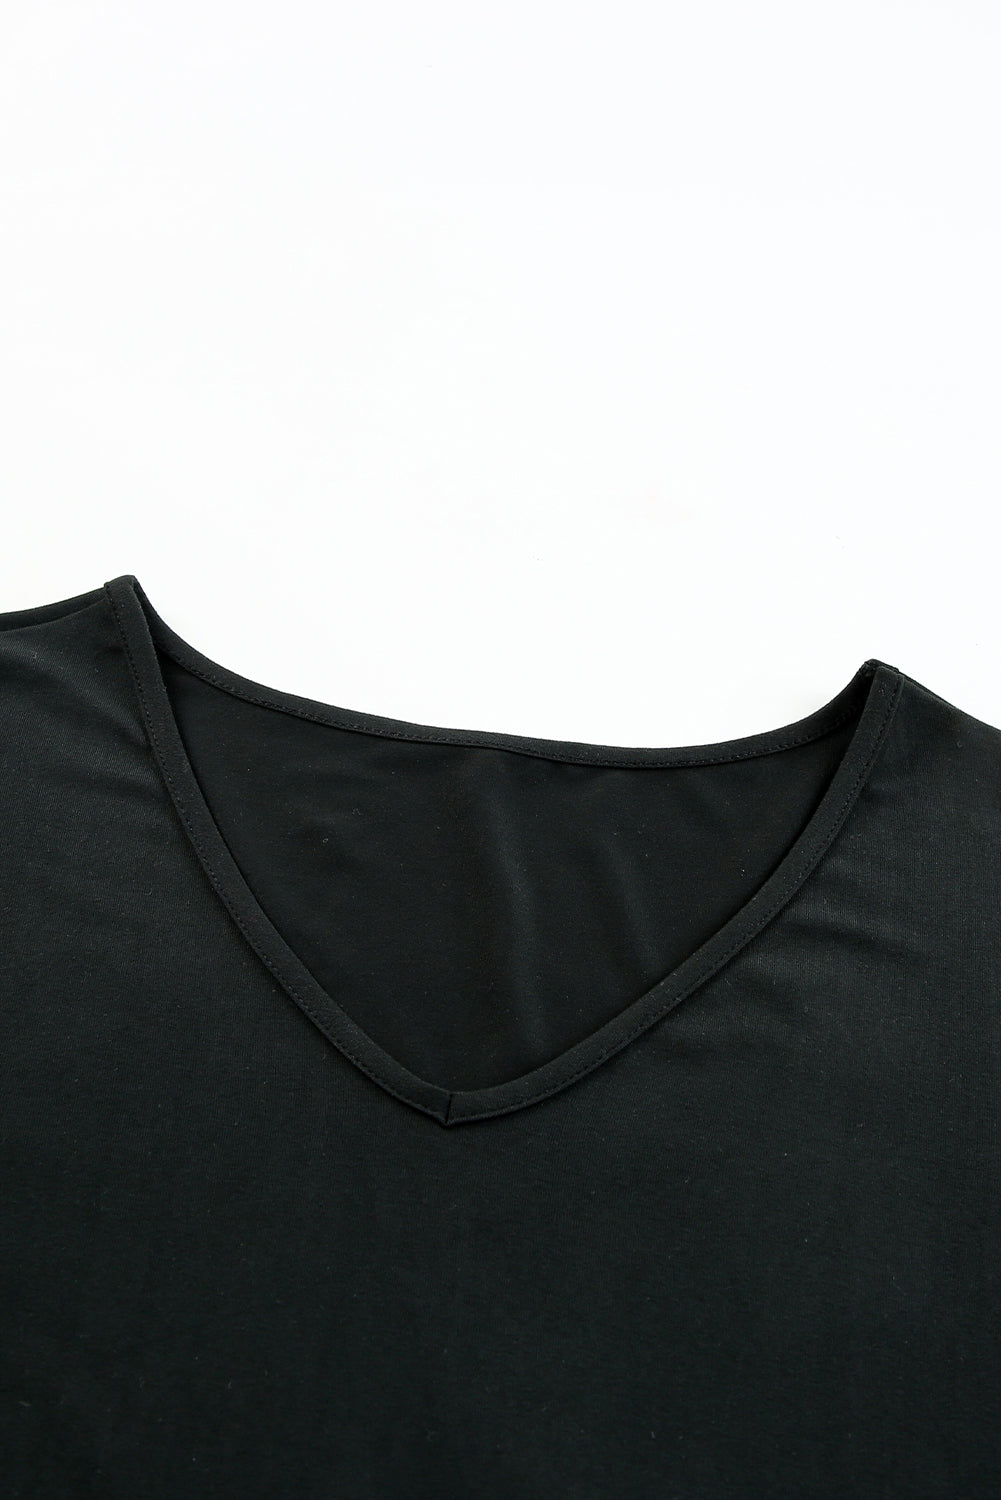 Black Leopard Color Block Side Slit T Shirt Maxi Dress